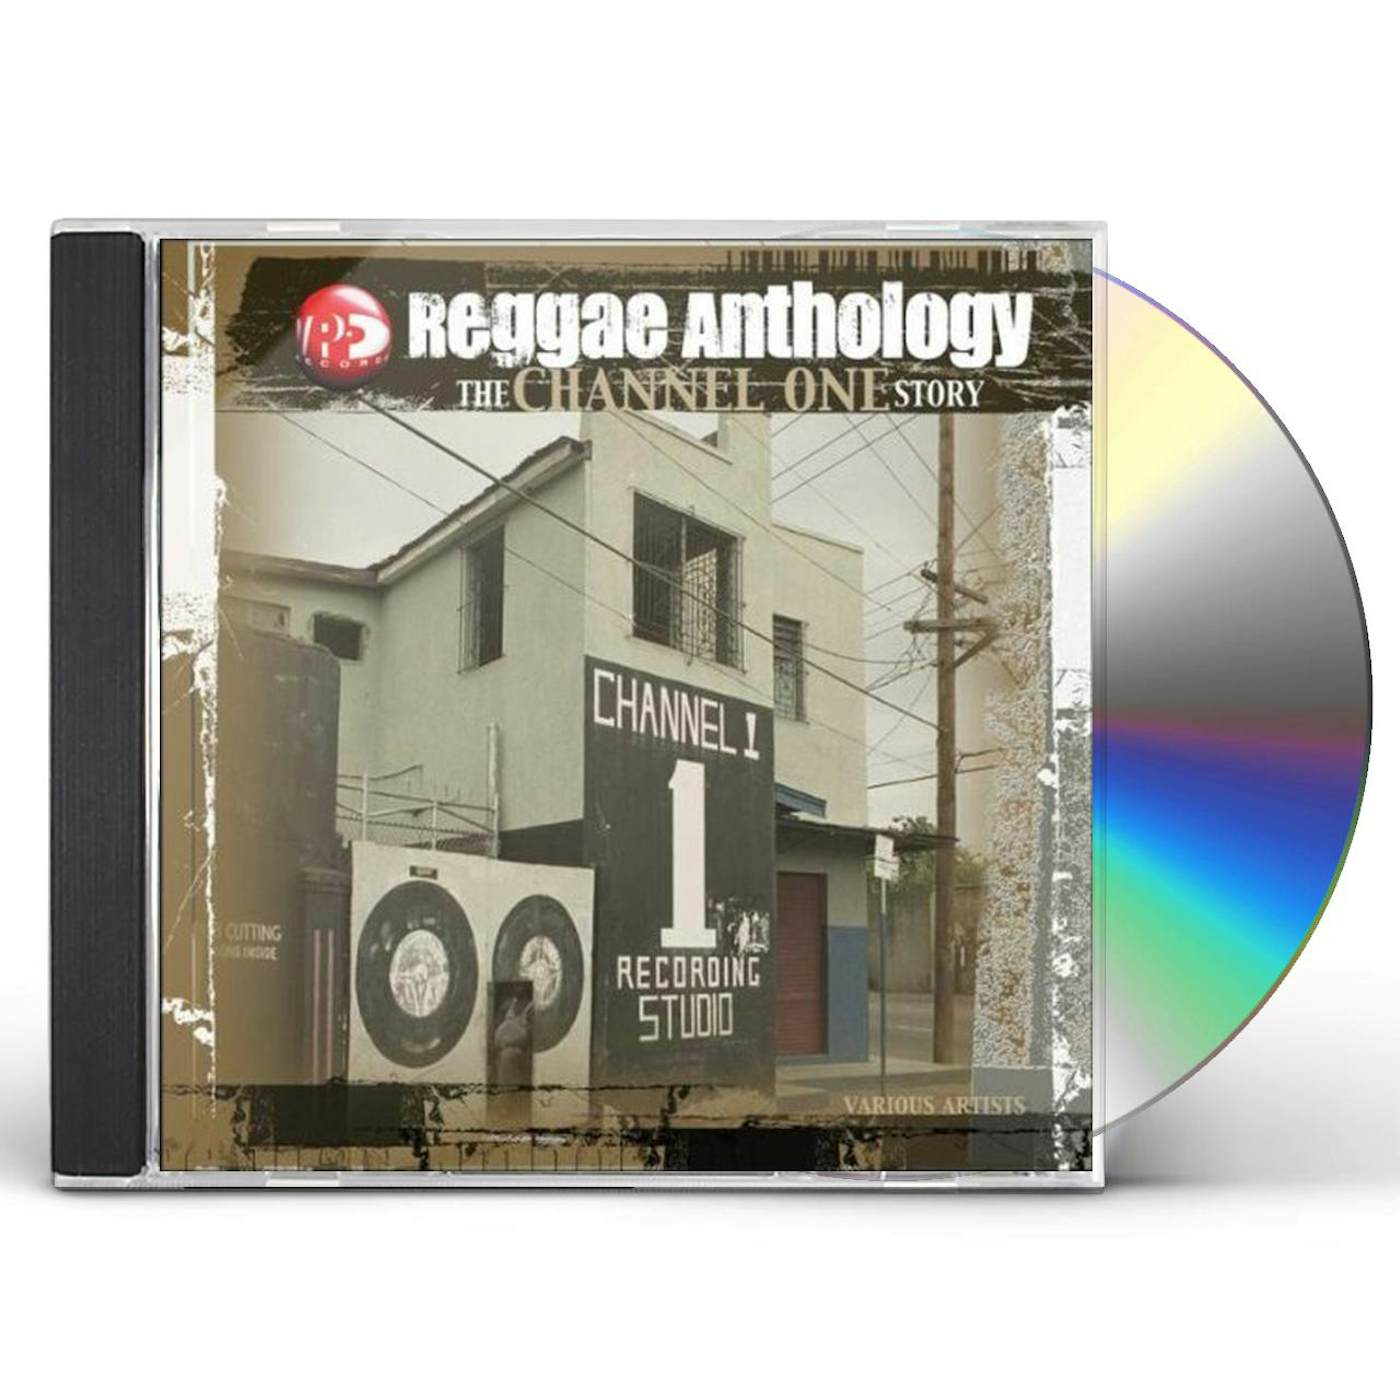 REGGAE ANTHOLOGY: CHANNEL ONE / VARIOUS CD